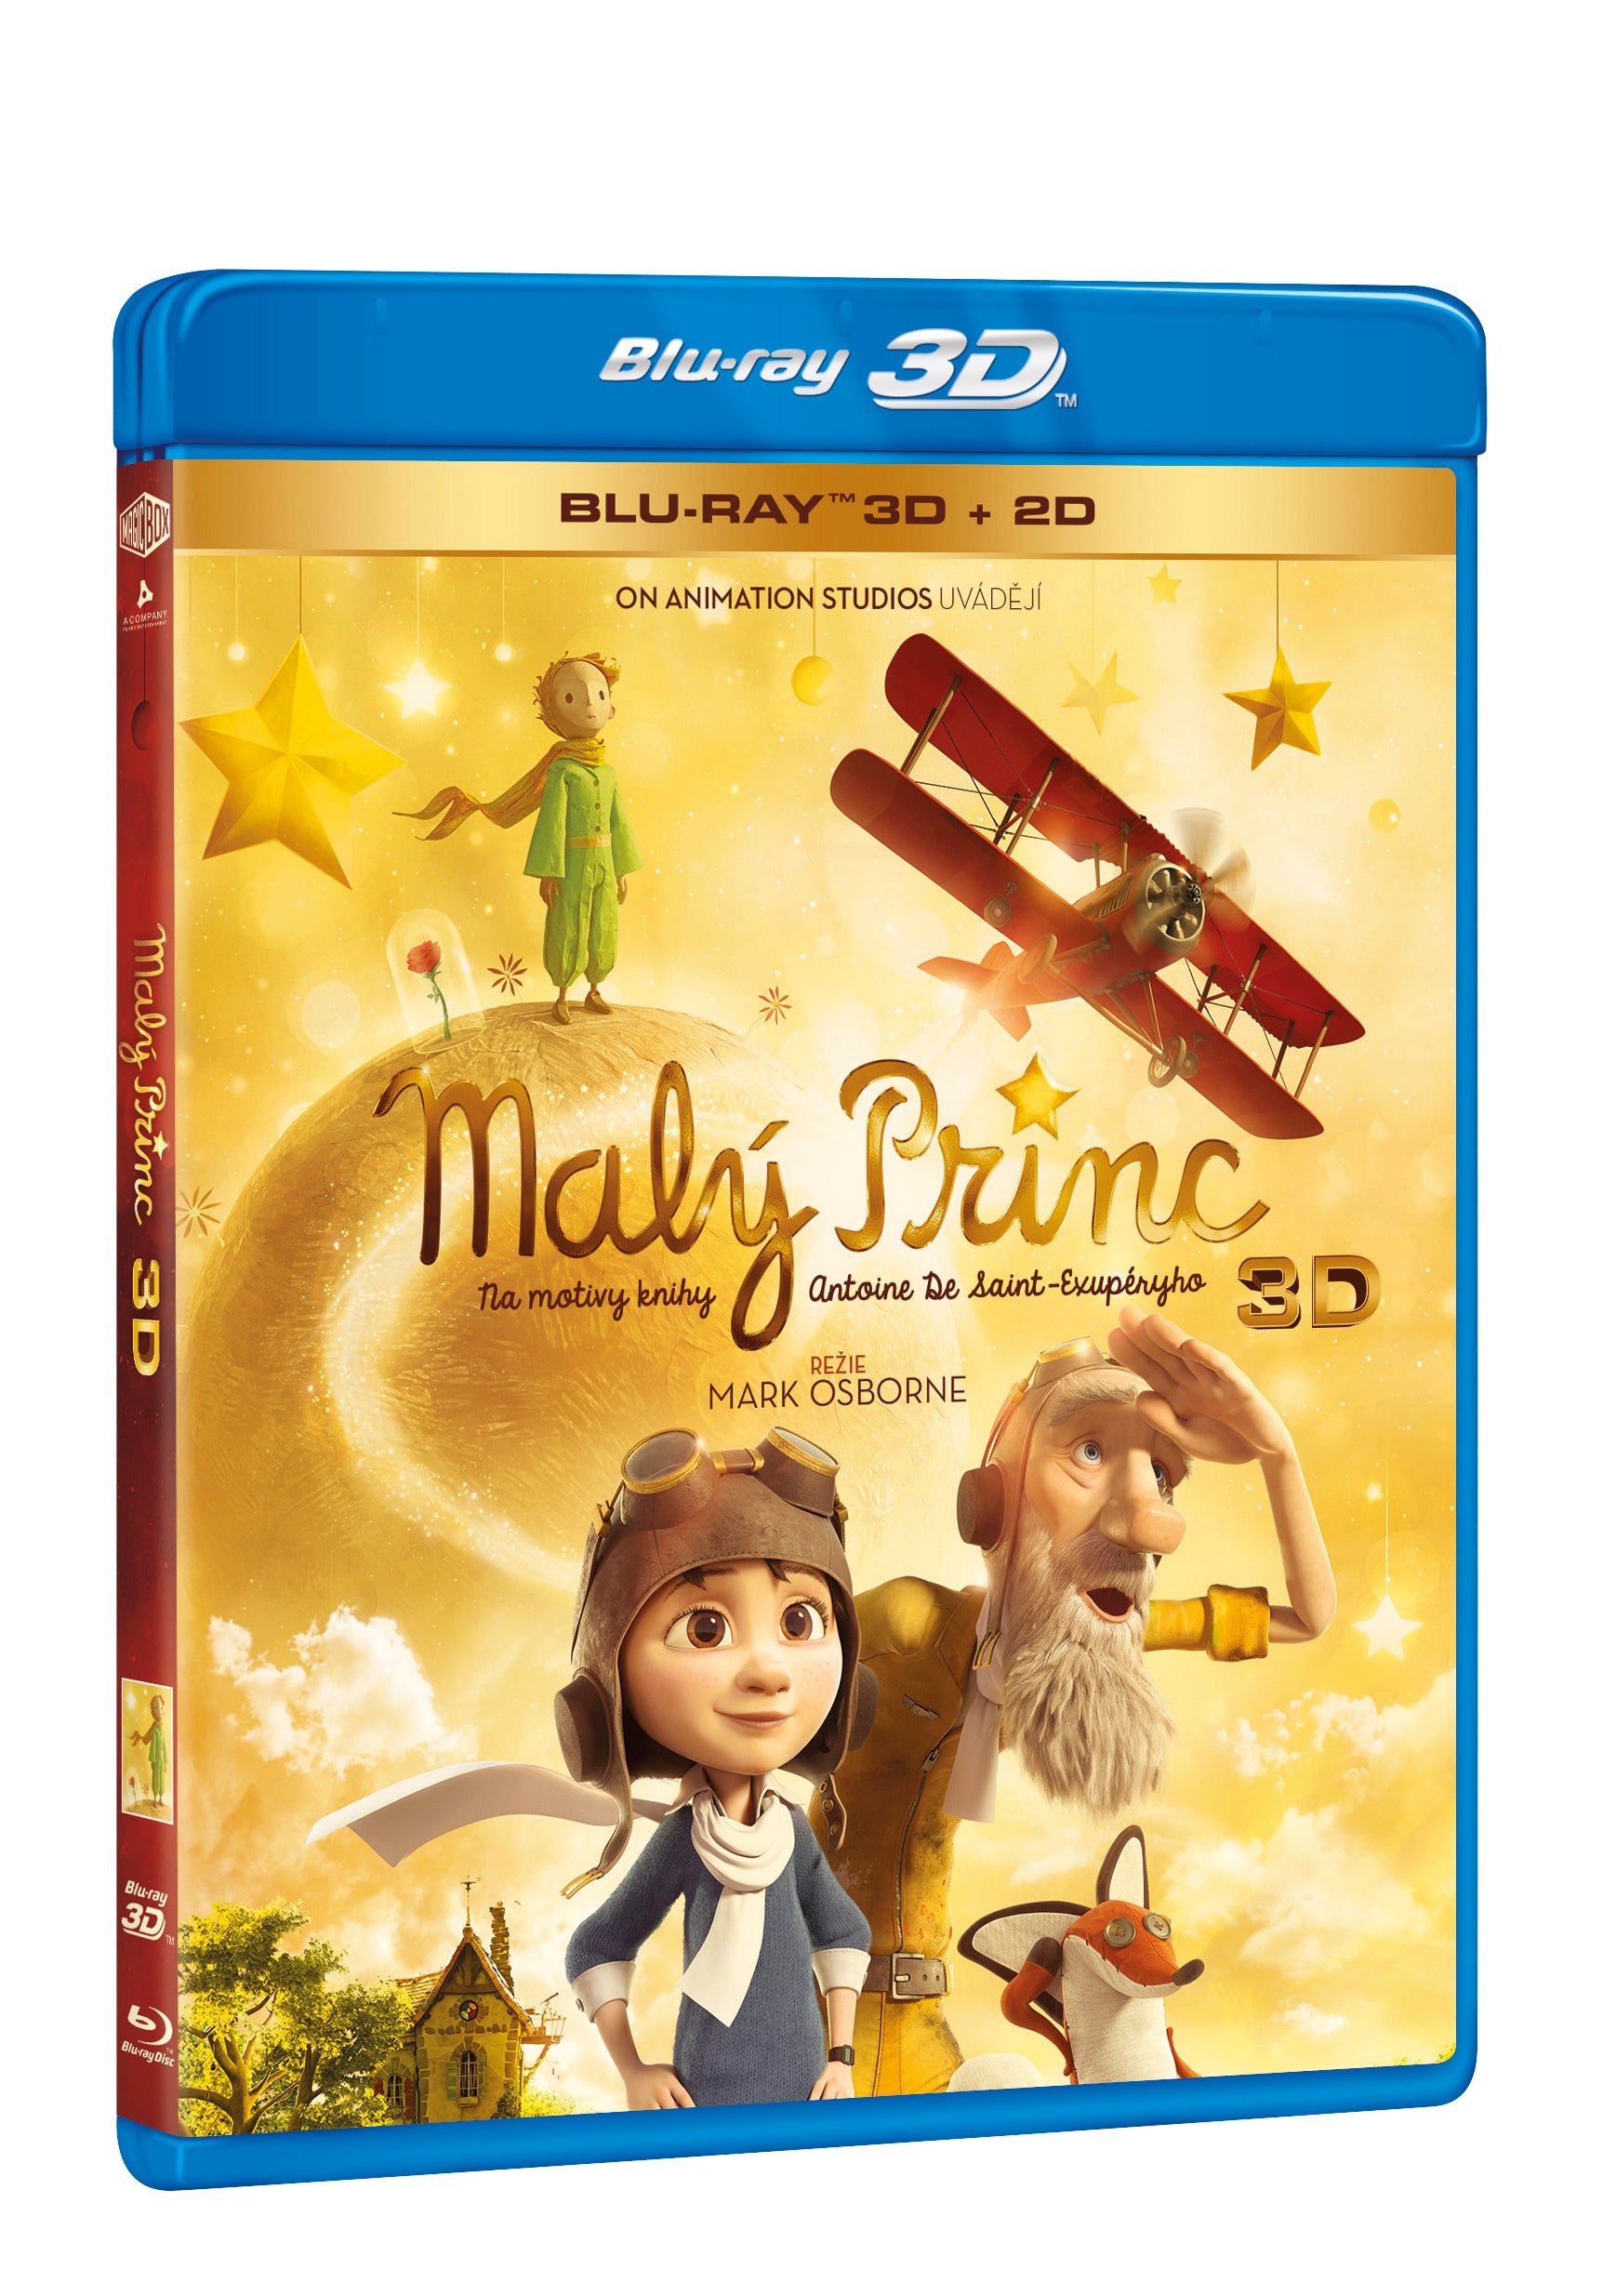 Maly princ BD (3D+2D) / The Little Prince - Czech version